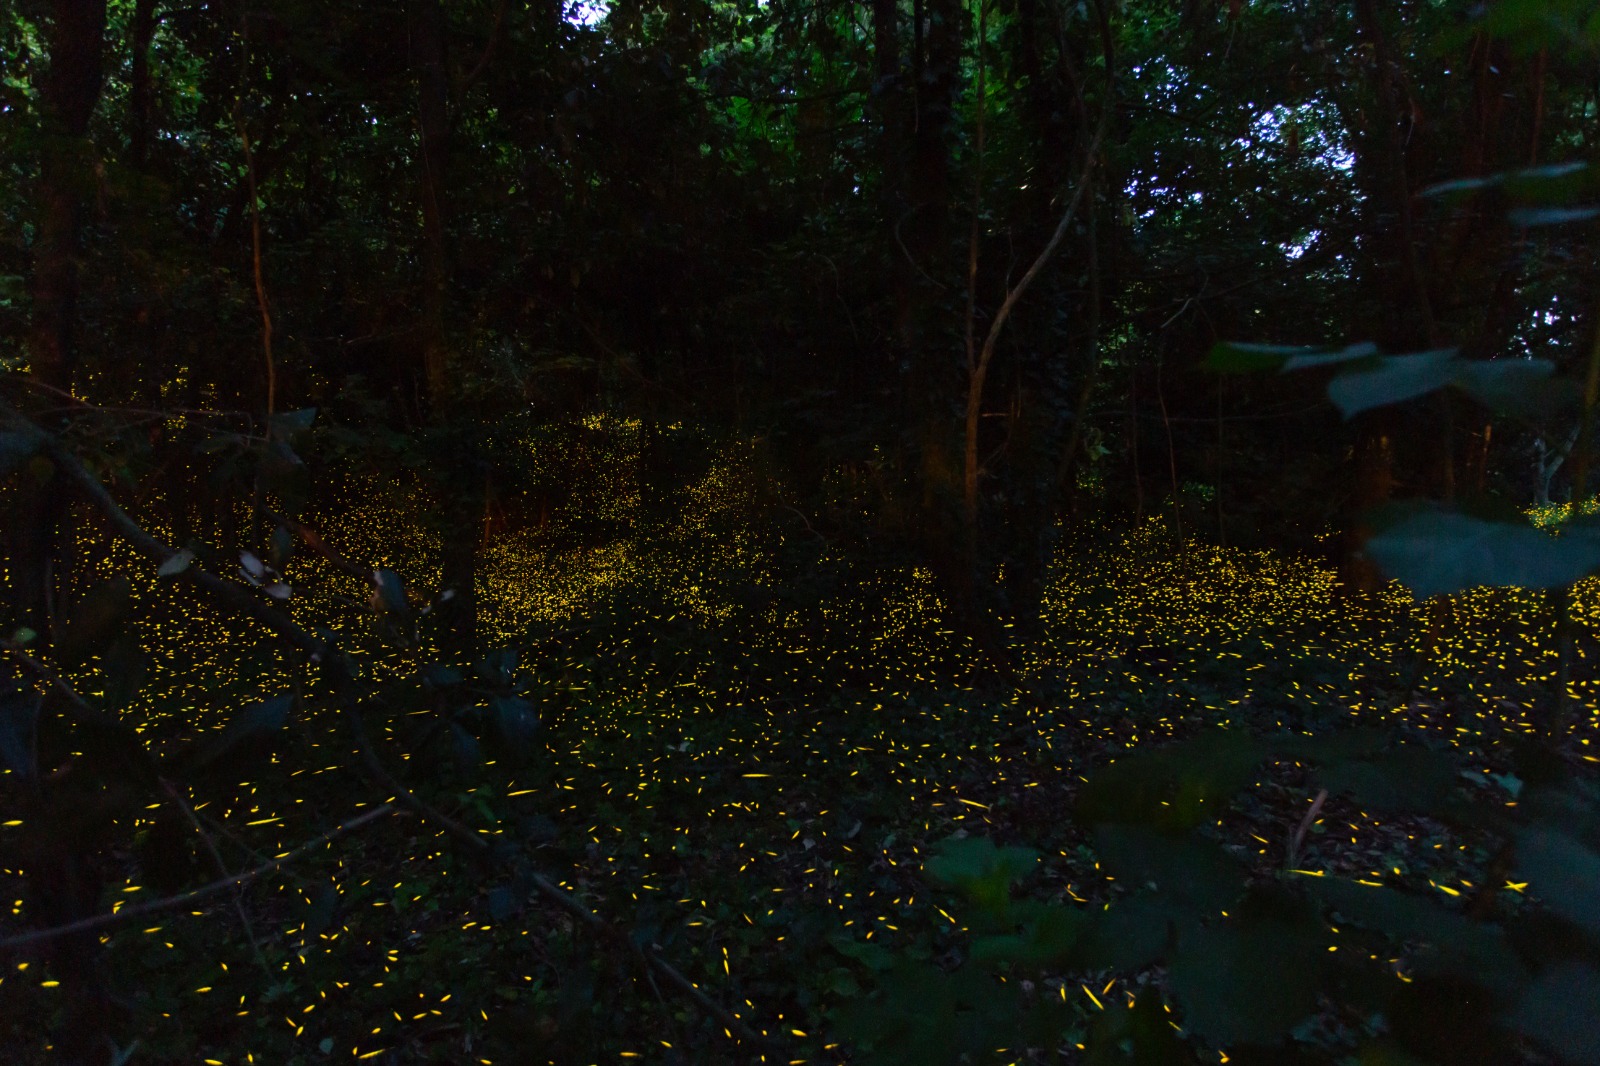 Fireflies in the Woods...